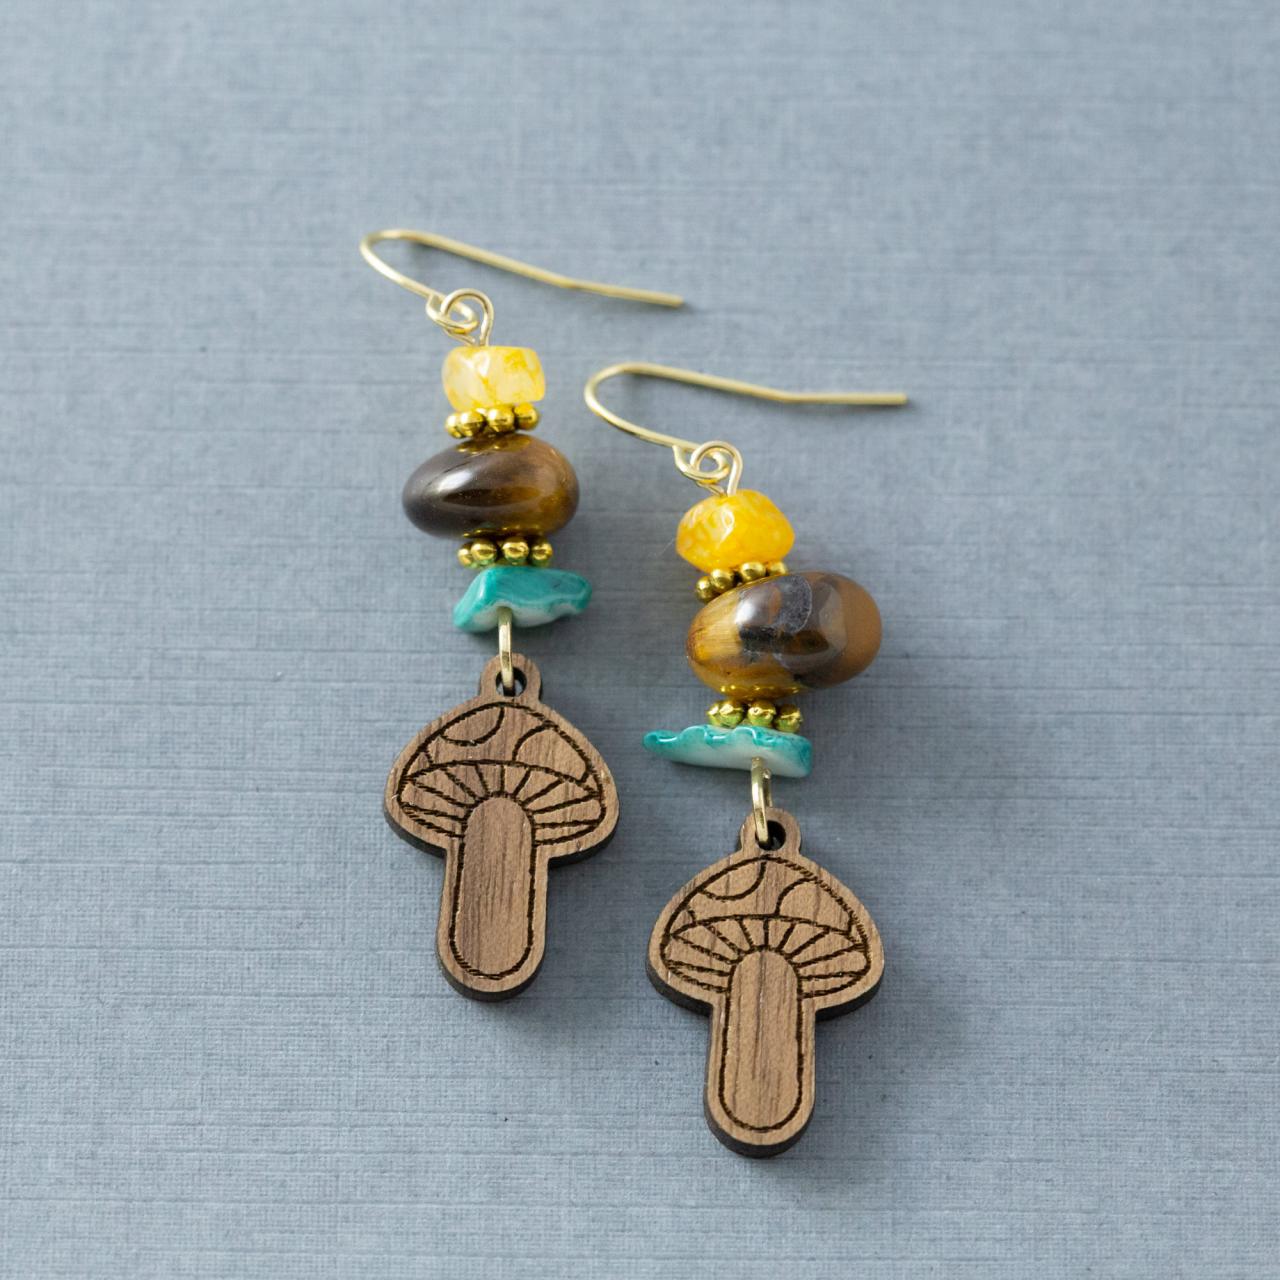 Boho Mushroom Earrings, Colorful Hippie Earrings, Nature Earrings, Forest Earrings, Woodland Earrings, Wood Mushroom Jewelry